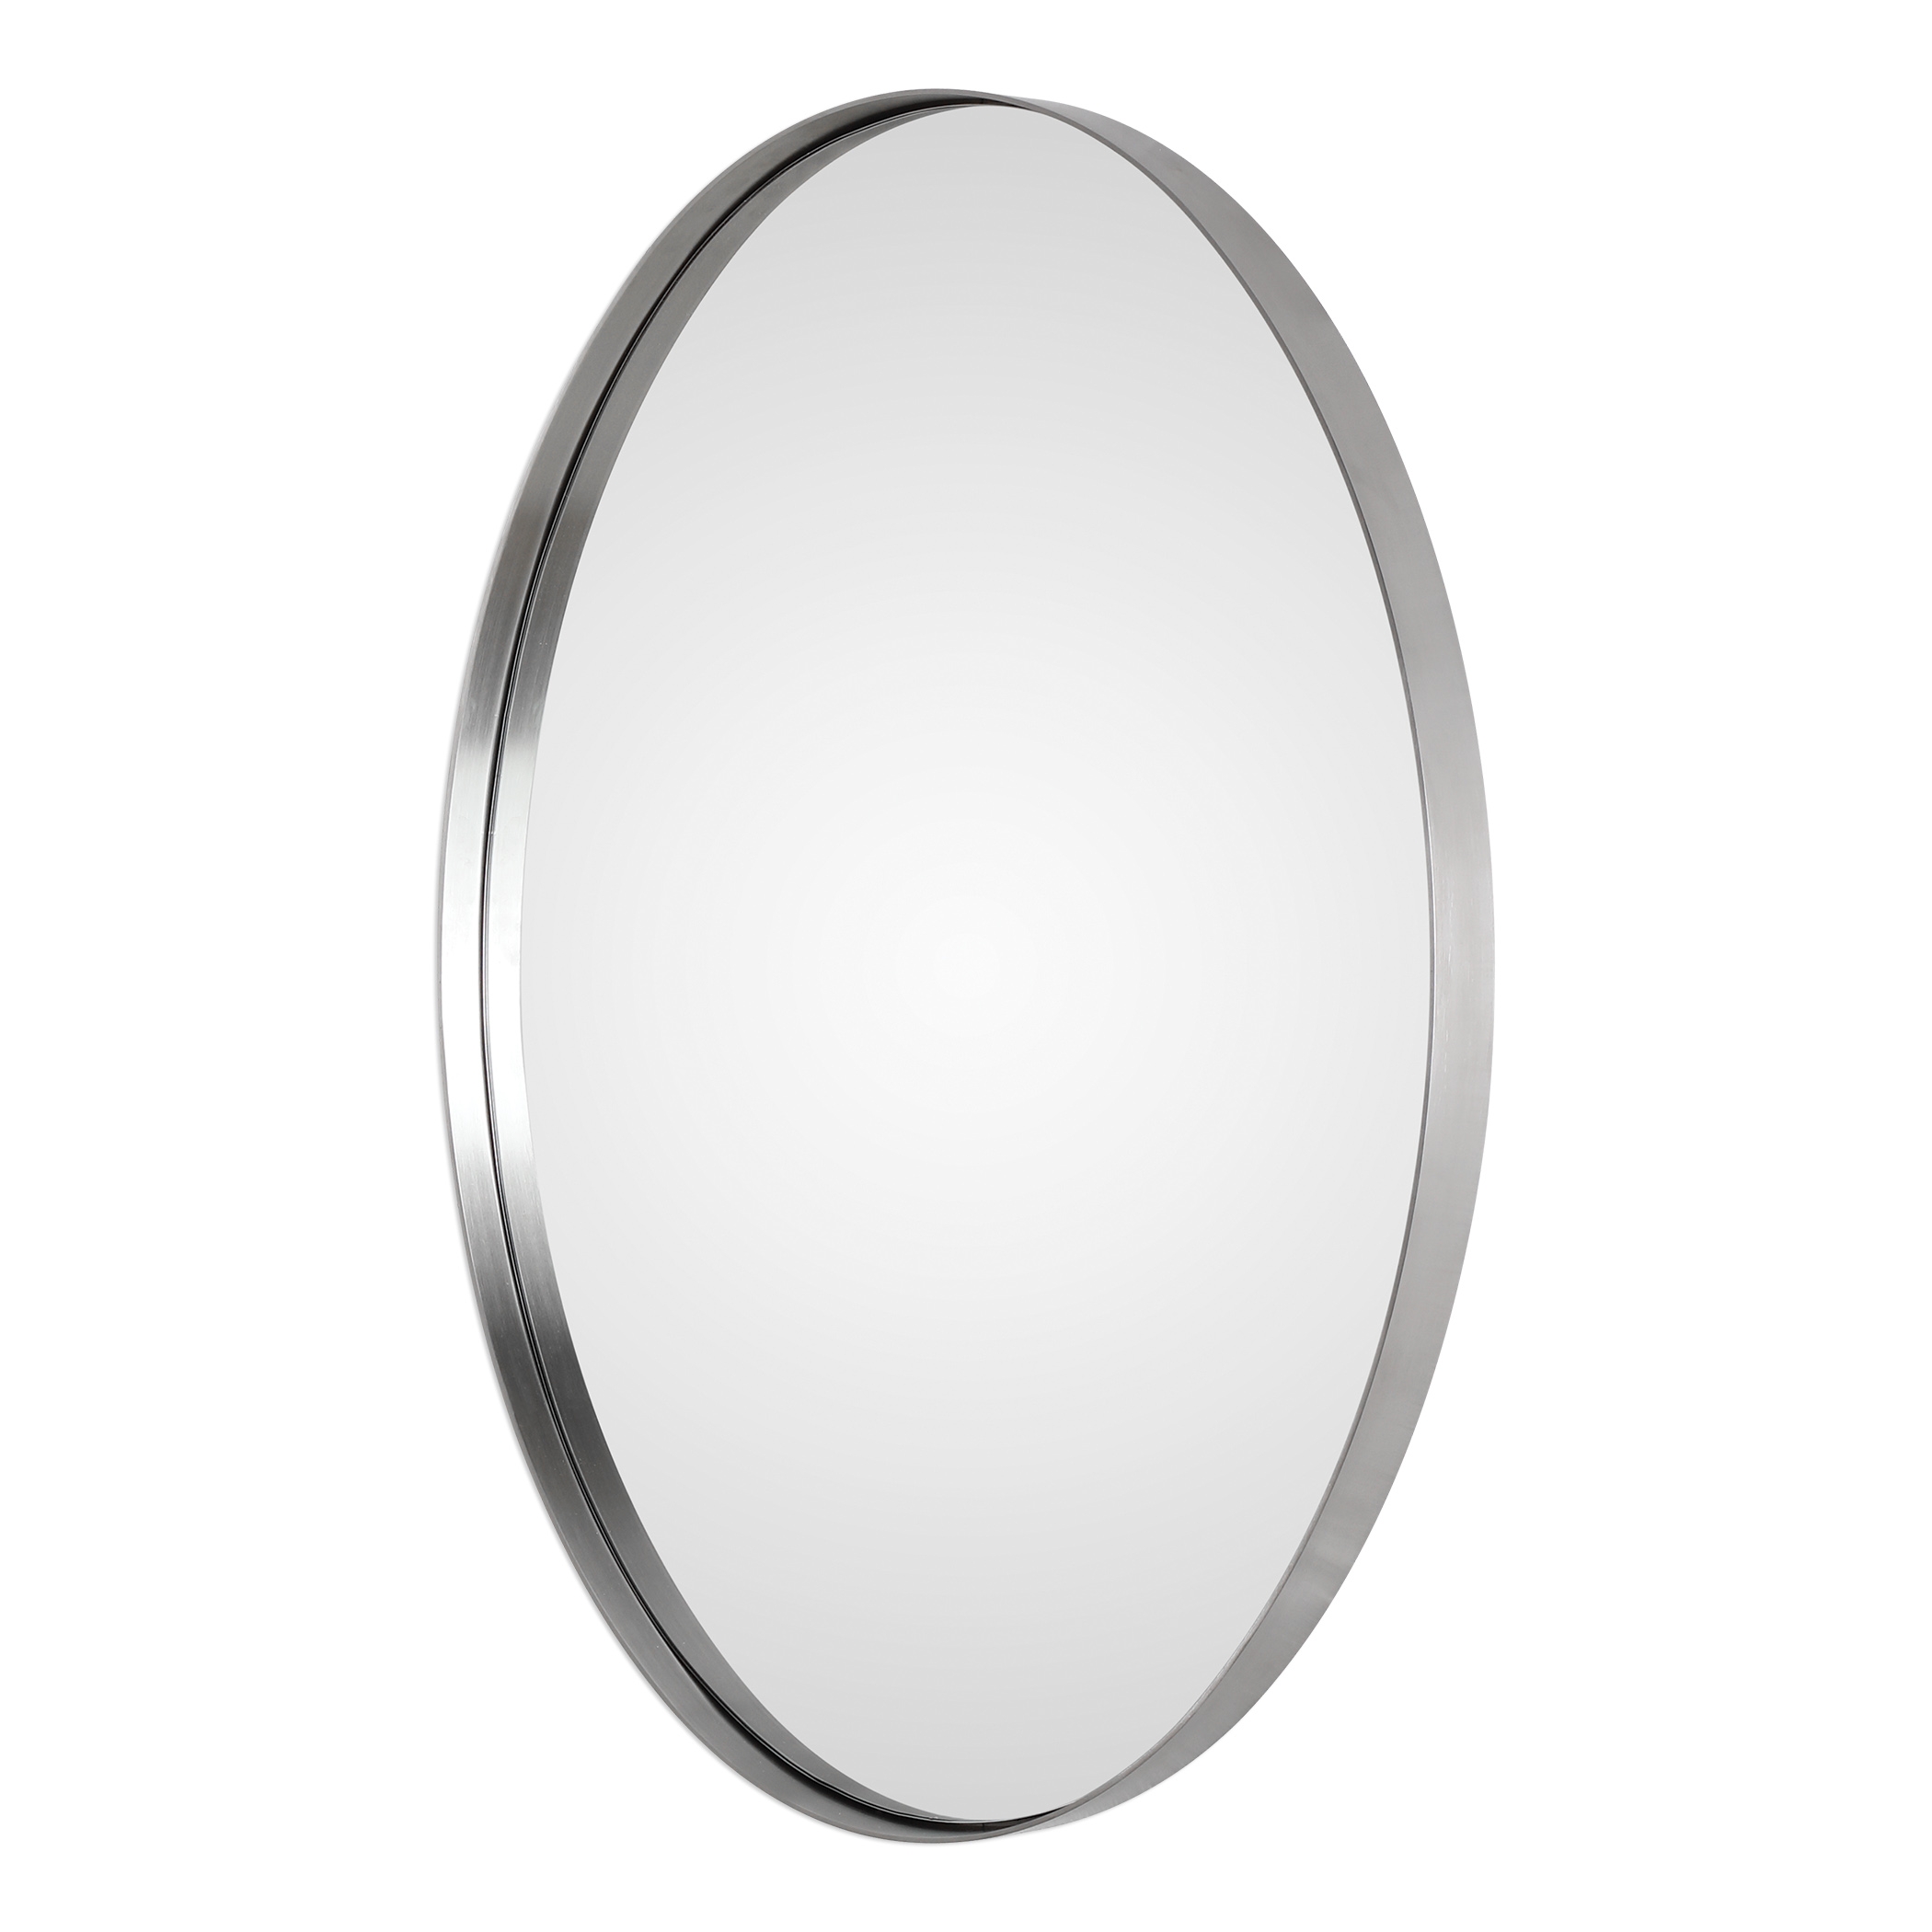 Pursley Brushed Nickel Oval Mirror - Image 2